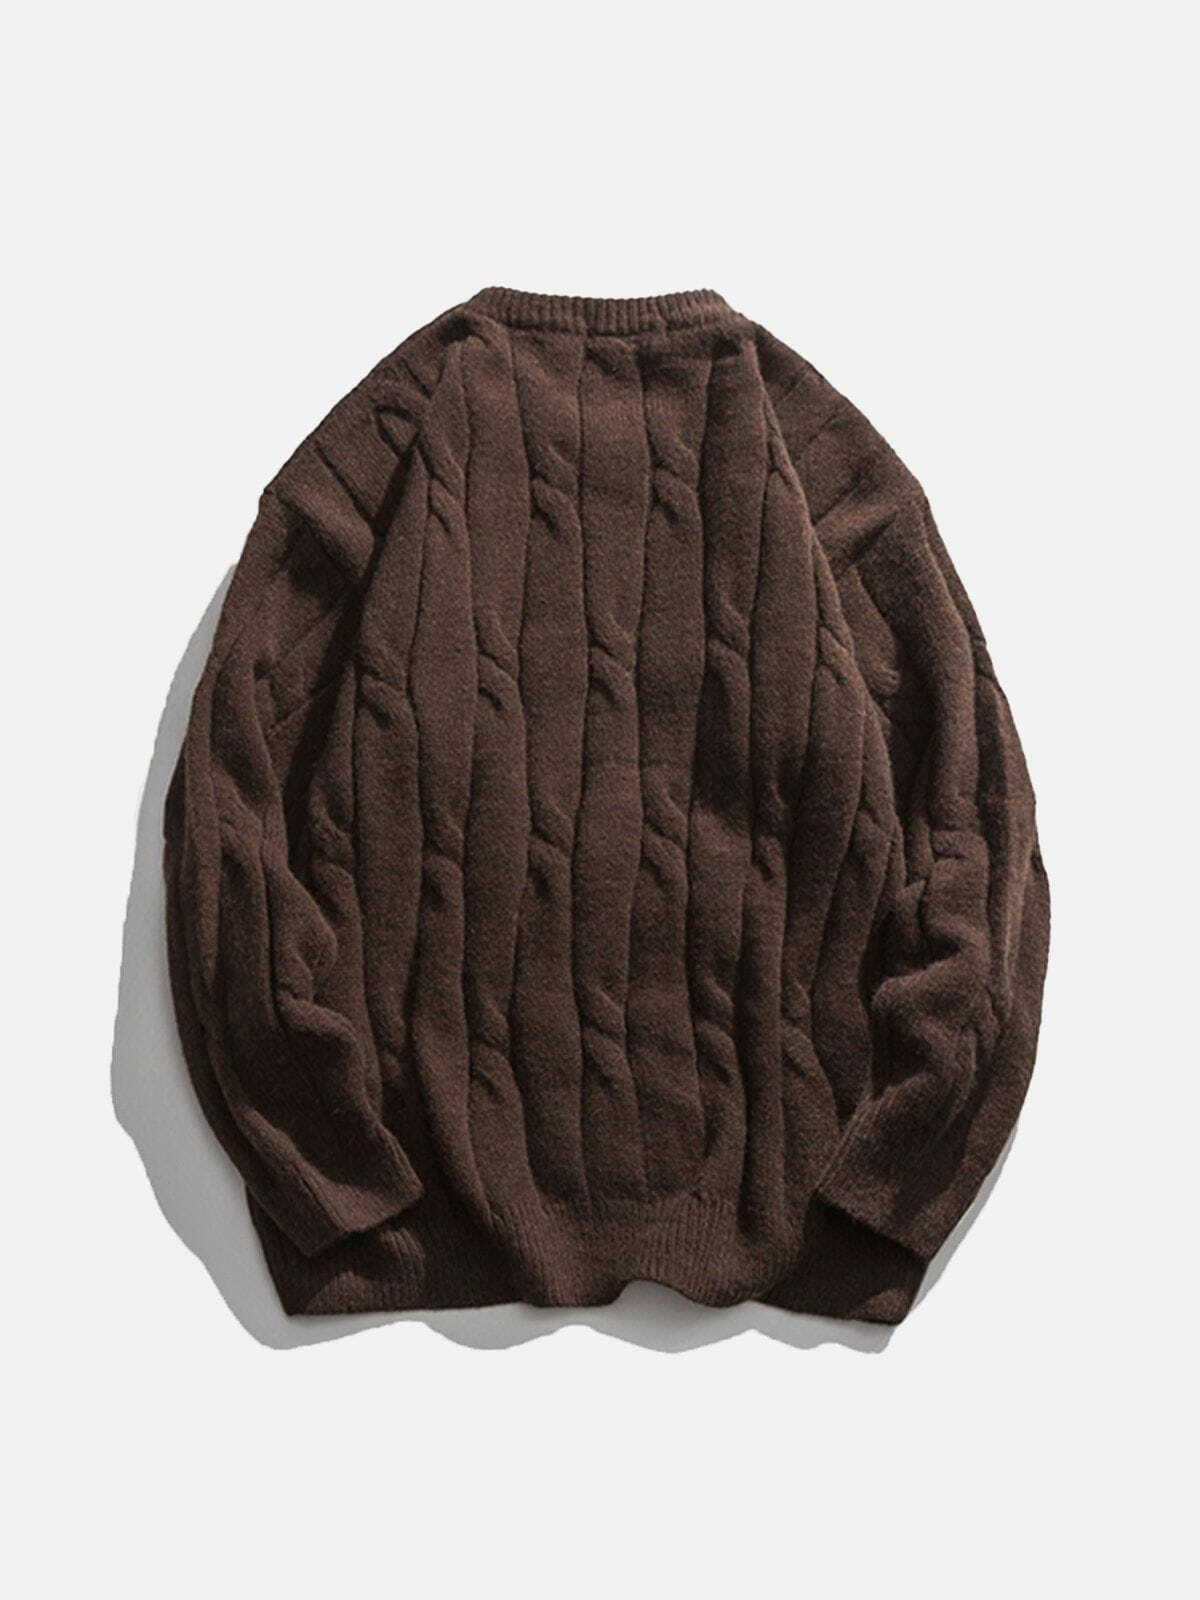 vibrant woven sweater bold & chic streetwear 4941